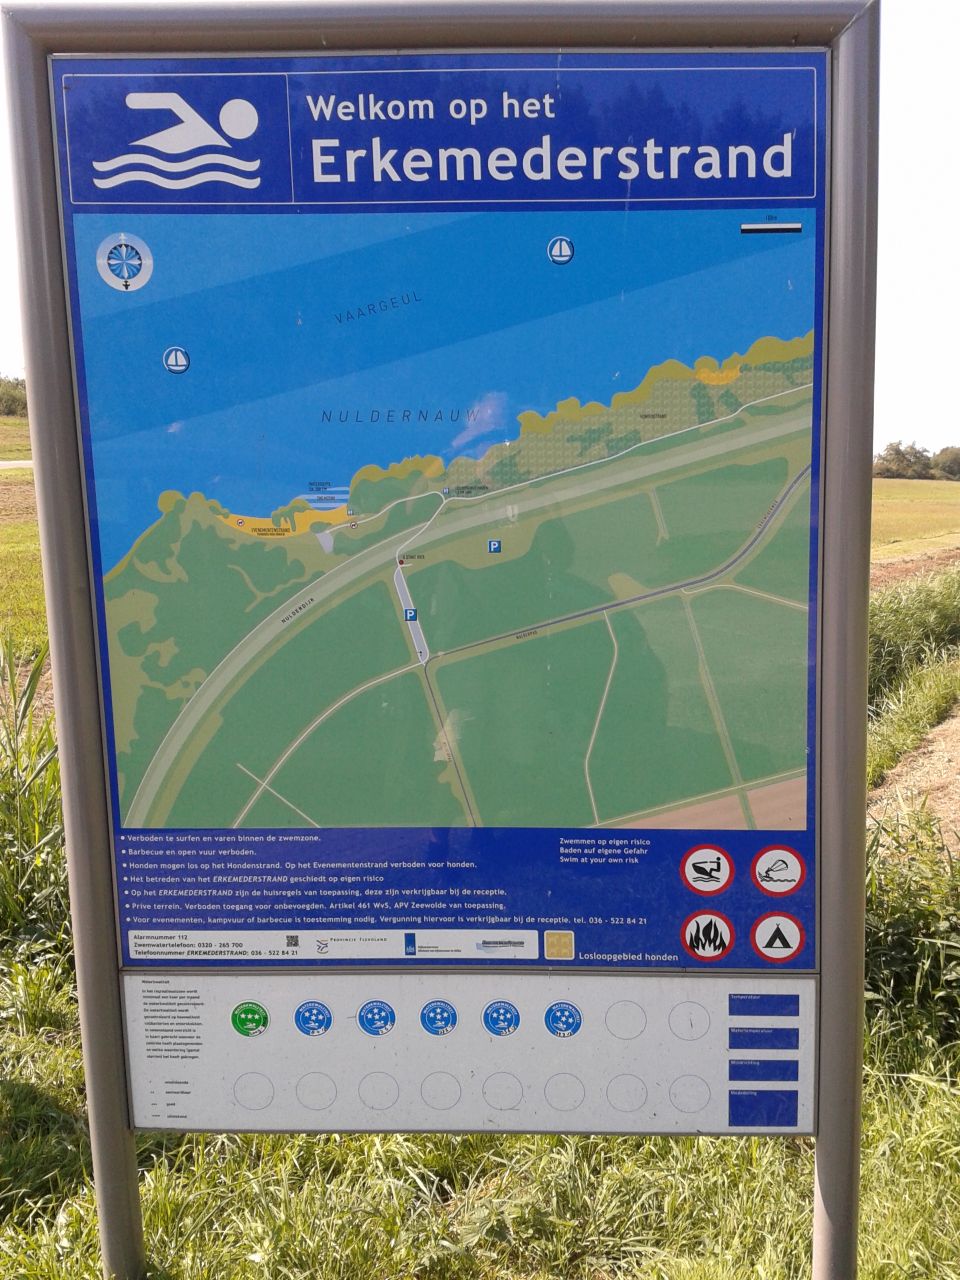 The information board at the swimming location Erkermederstrand Hondenstrand